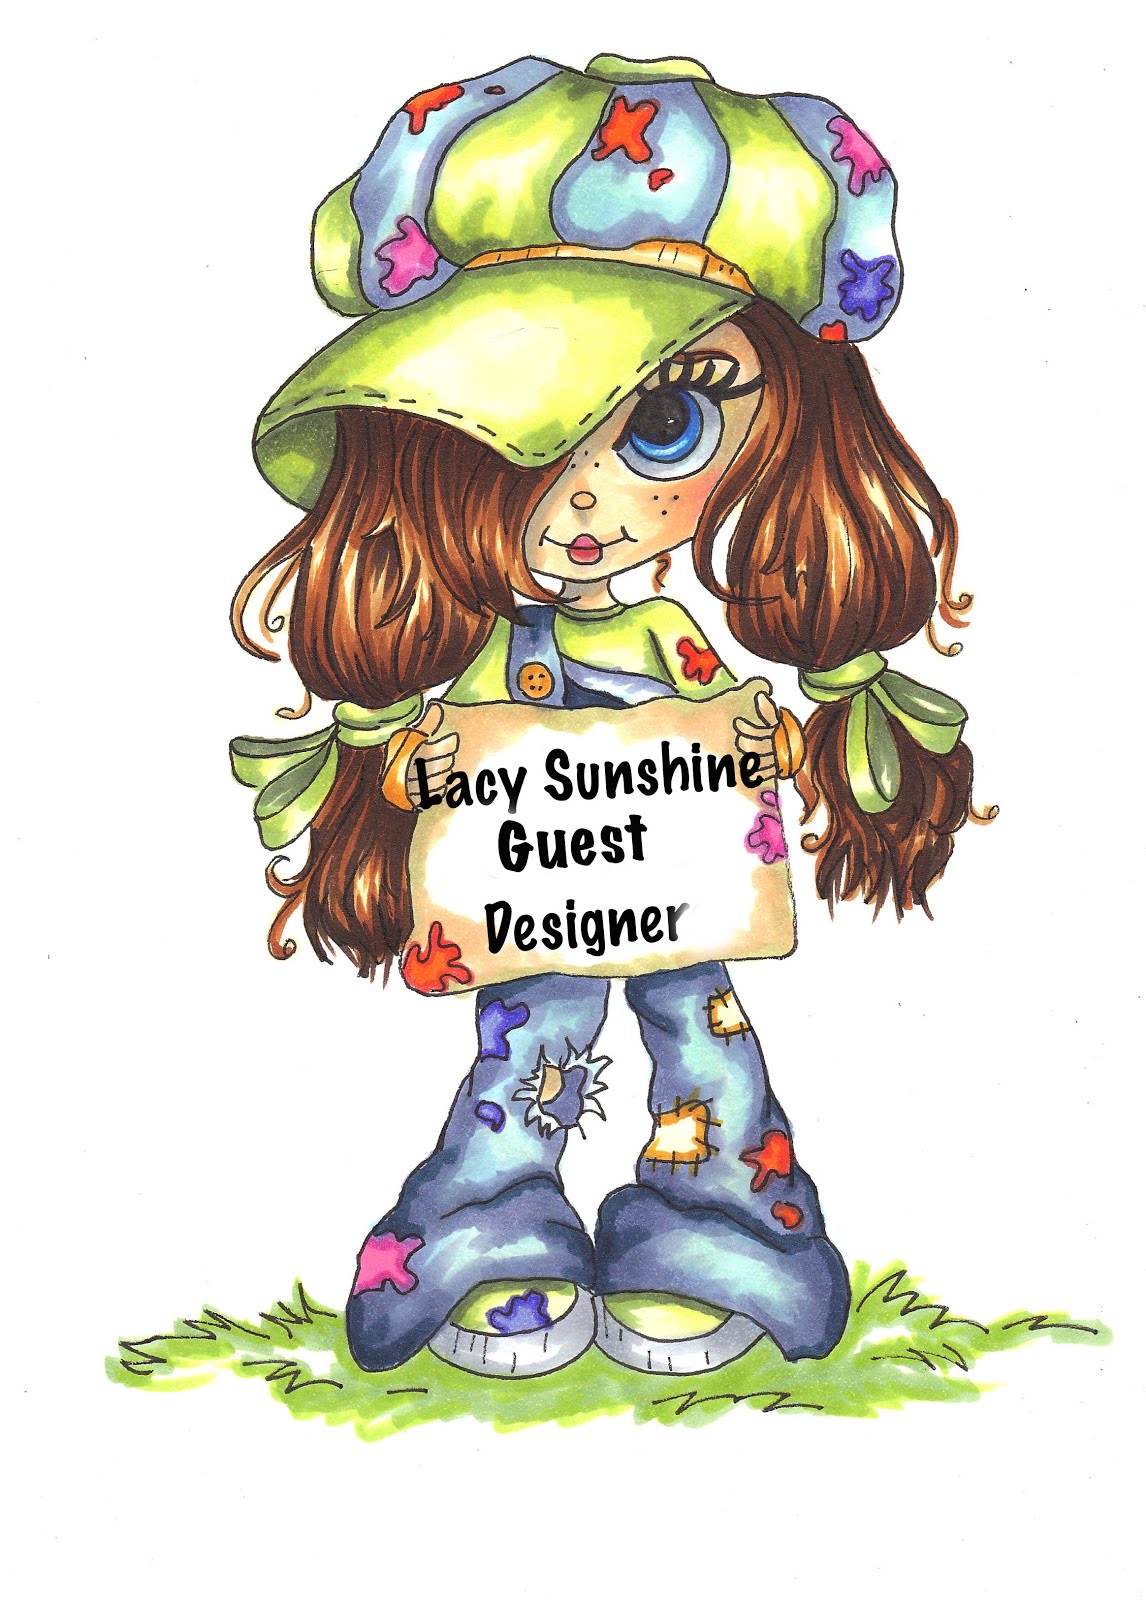 Lacy Sunshine Guest Designer